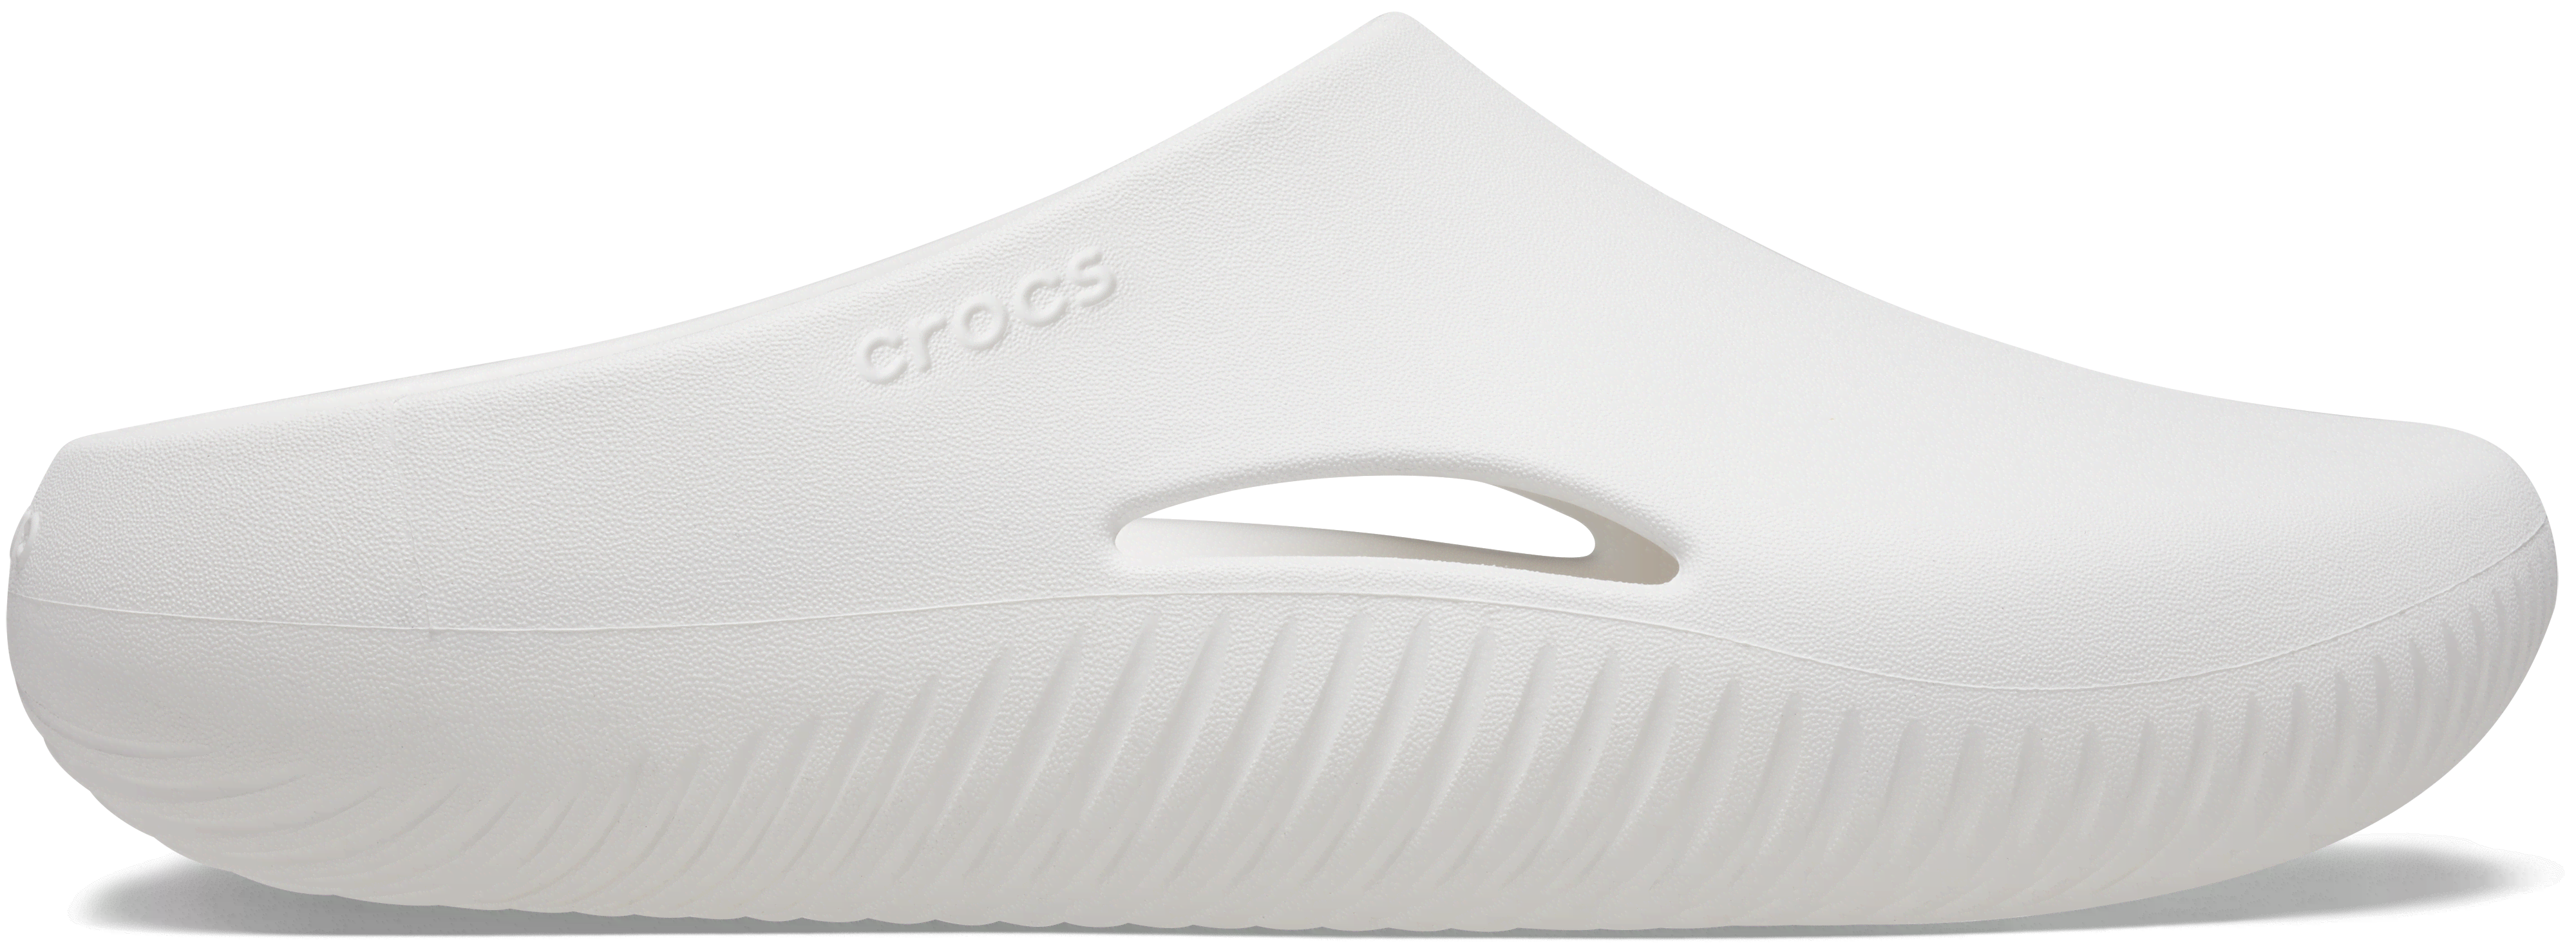 Crocs | Unisex | Mellow Recovery | Clogs | White | W6/M5